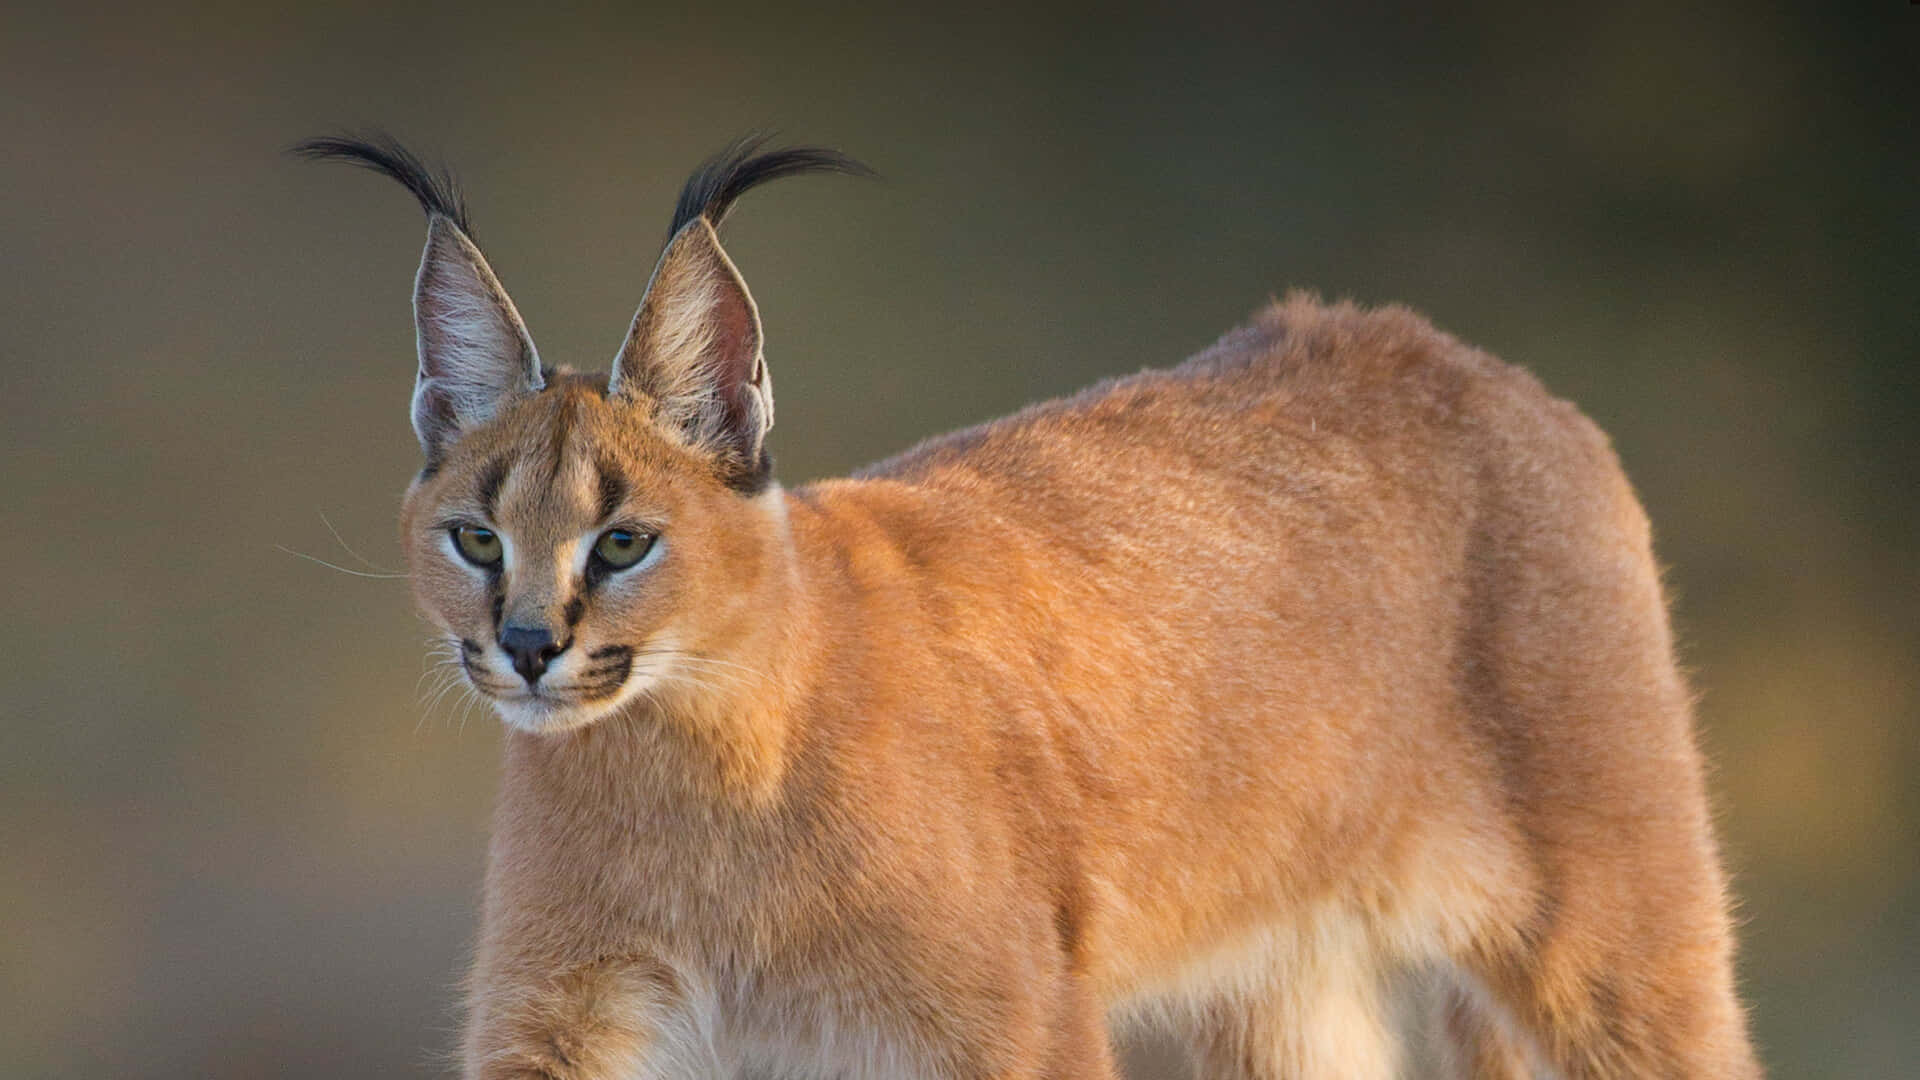 Majestic Desert Lynx in its Natural Habitat Wallpaper